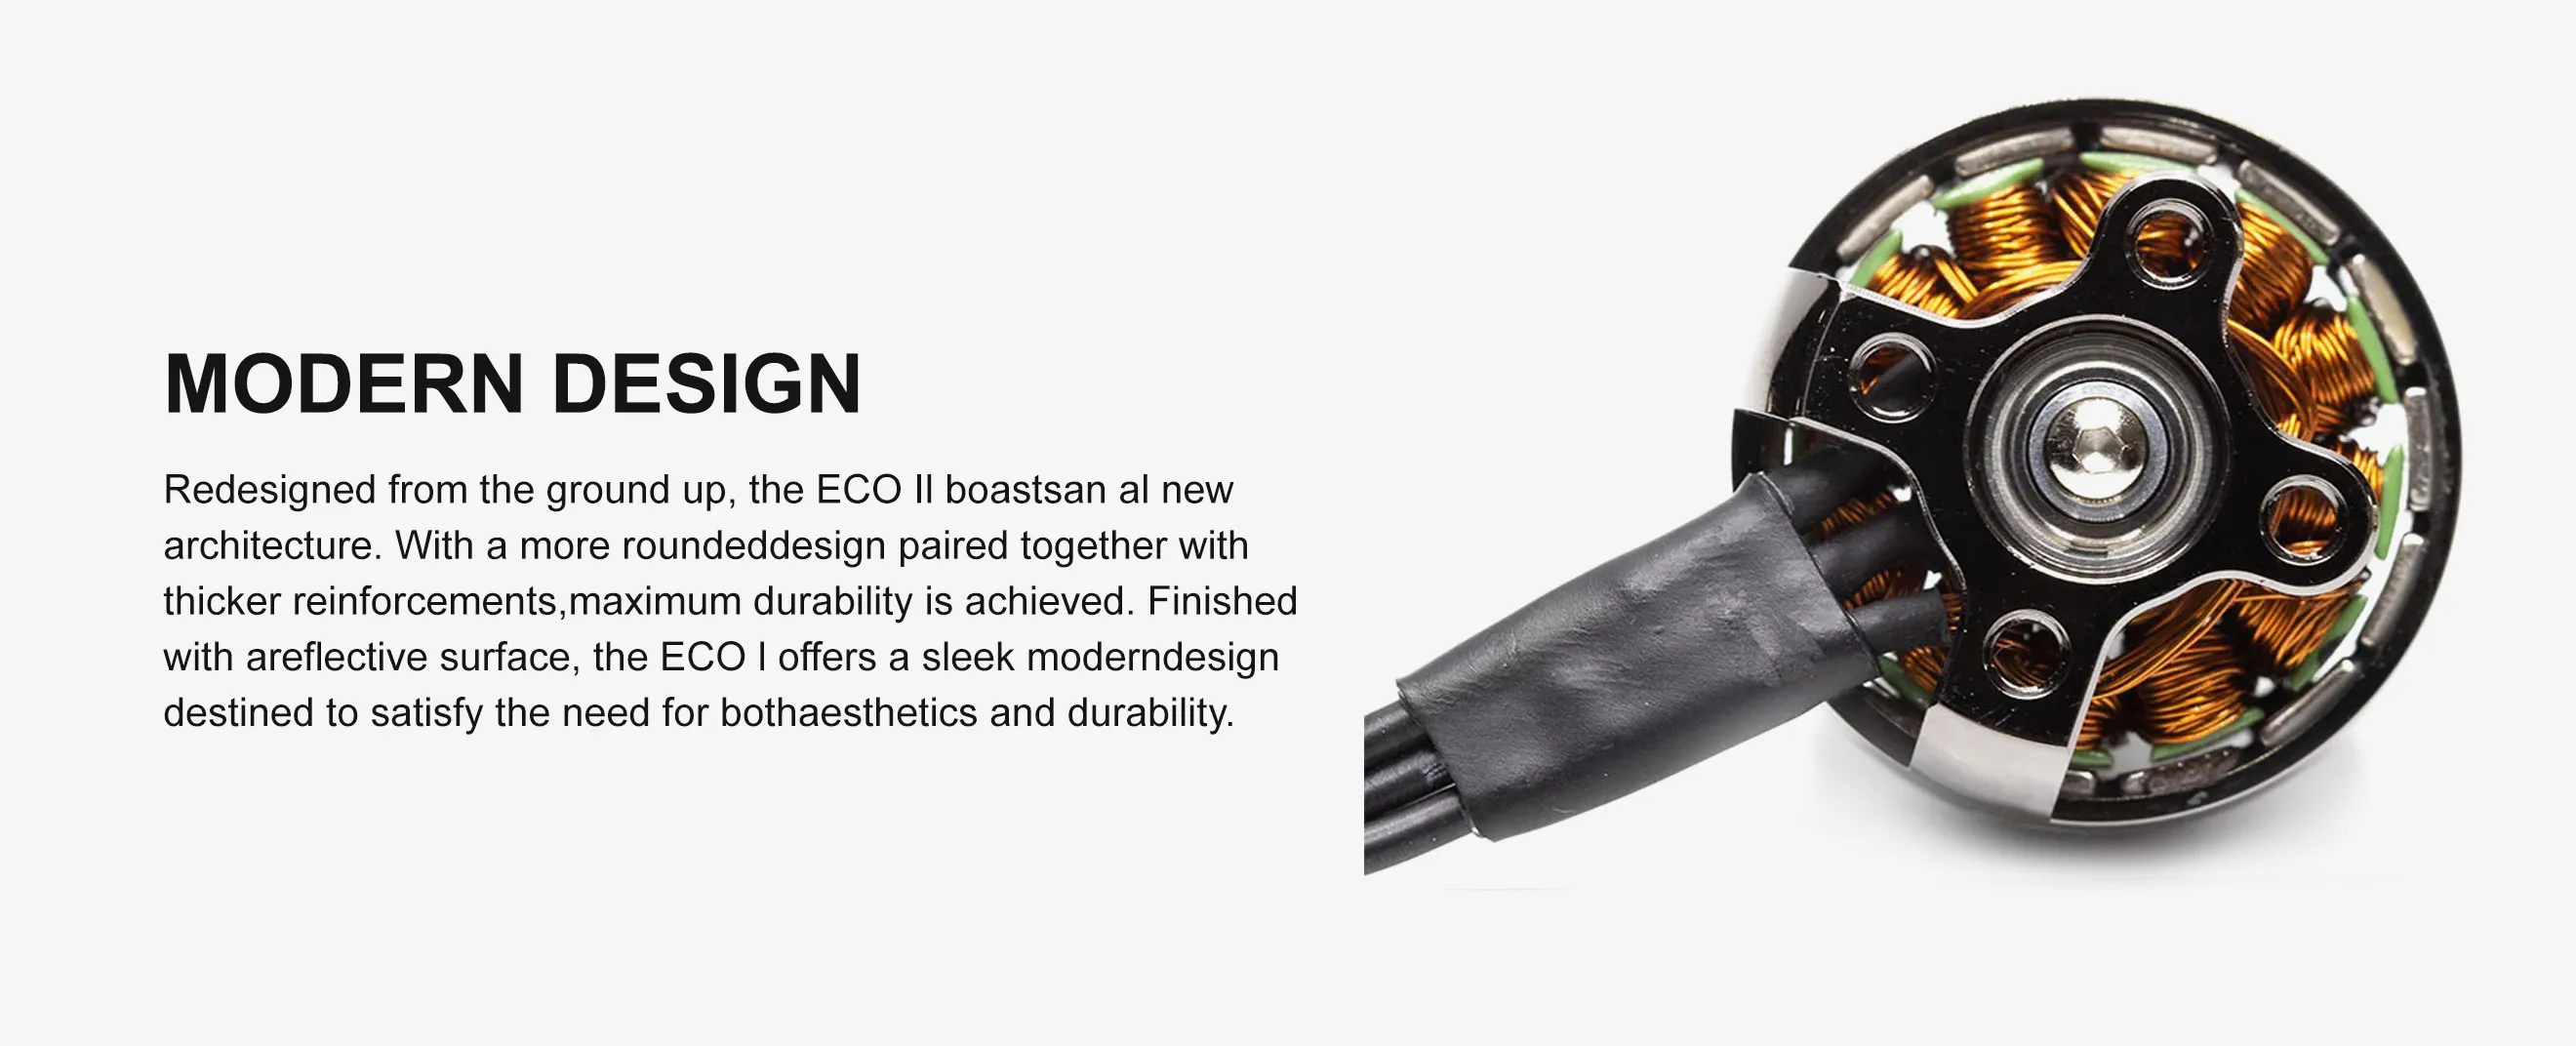 Emax ECO II 2807 brushless motor modern design